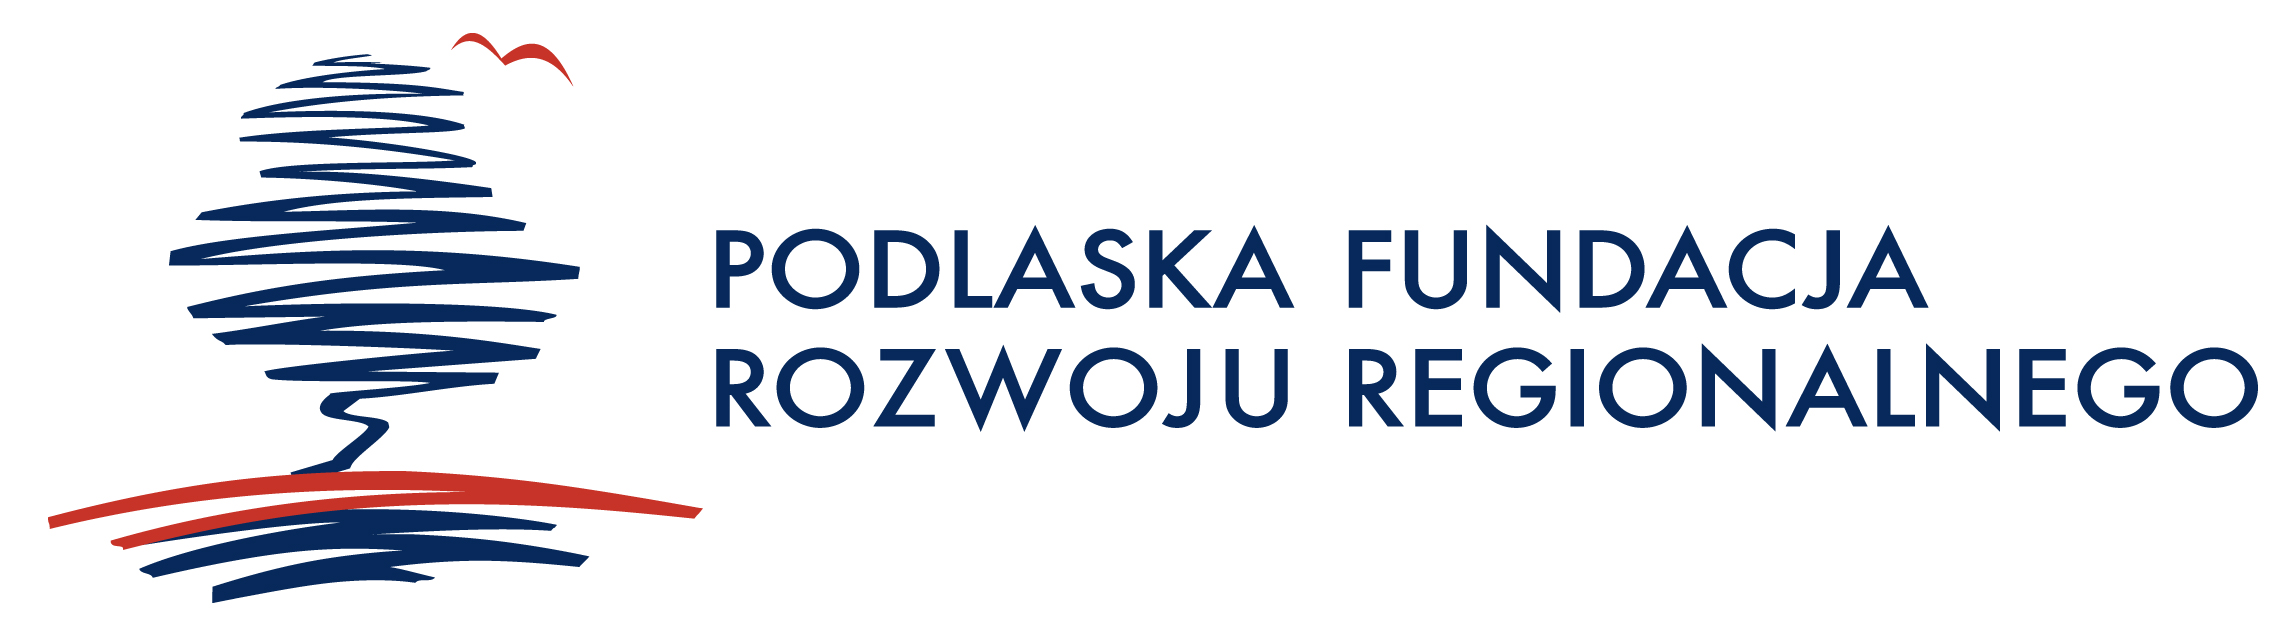 Logo Podlaska Fundacja Rozwoju Regionalnego